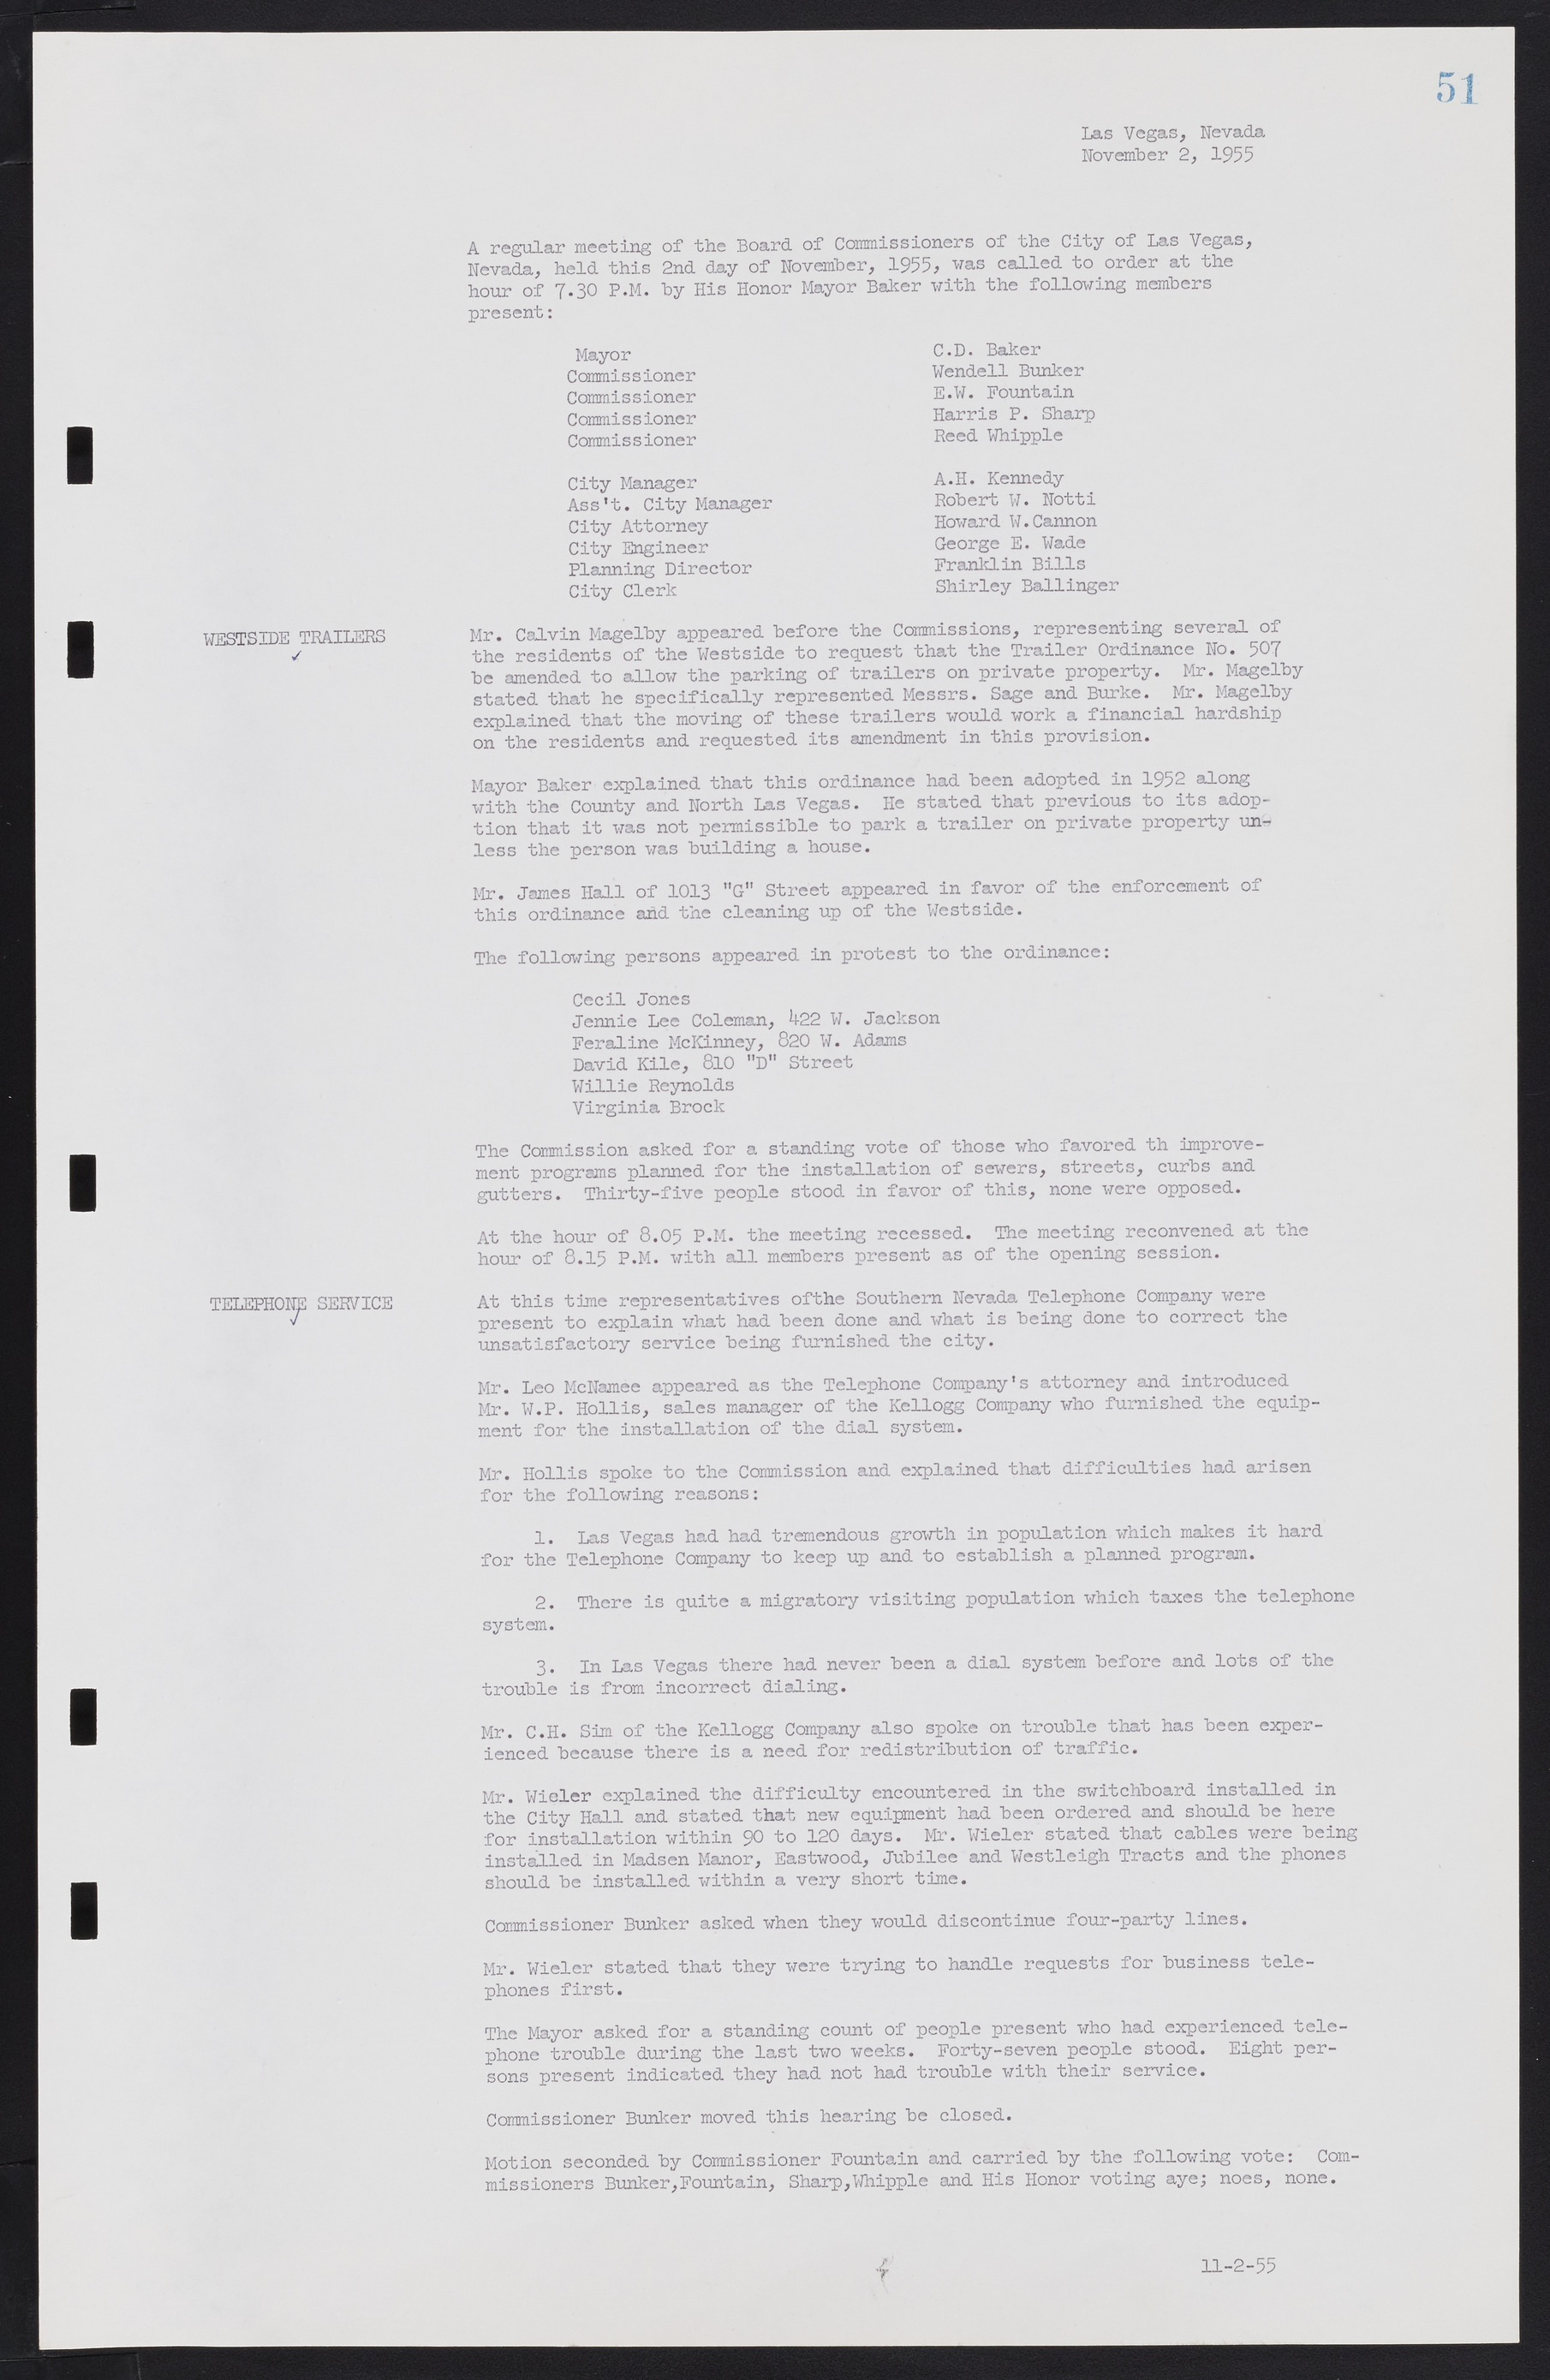 Las Vegas City Commission Minutes, September 21, 1955 to November 20, 1957, lvc000010-57